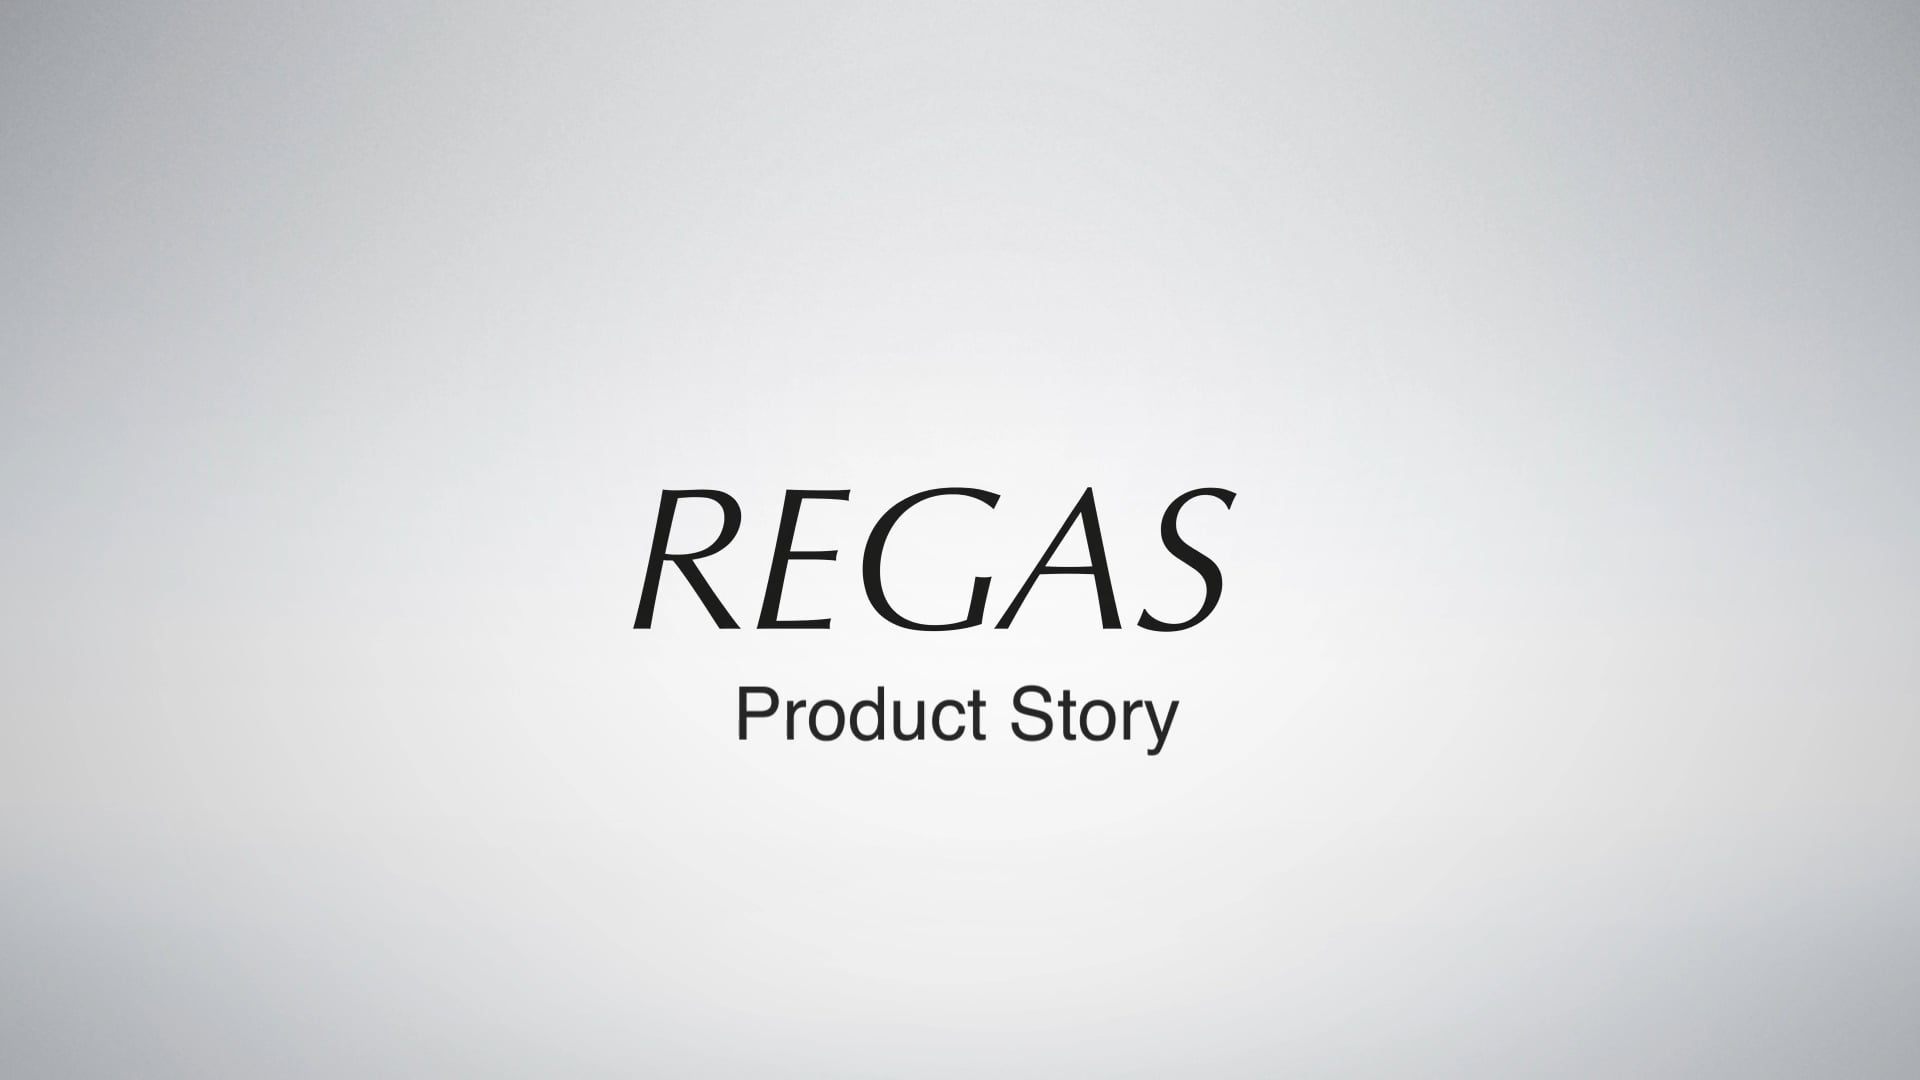 REGAS Product Story